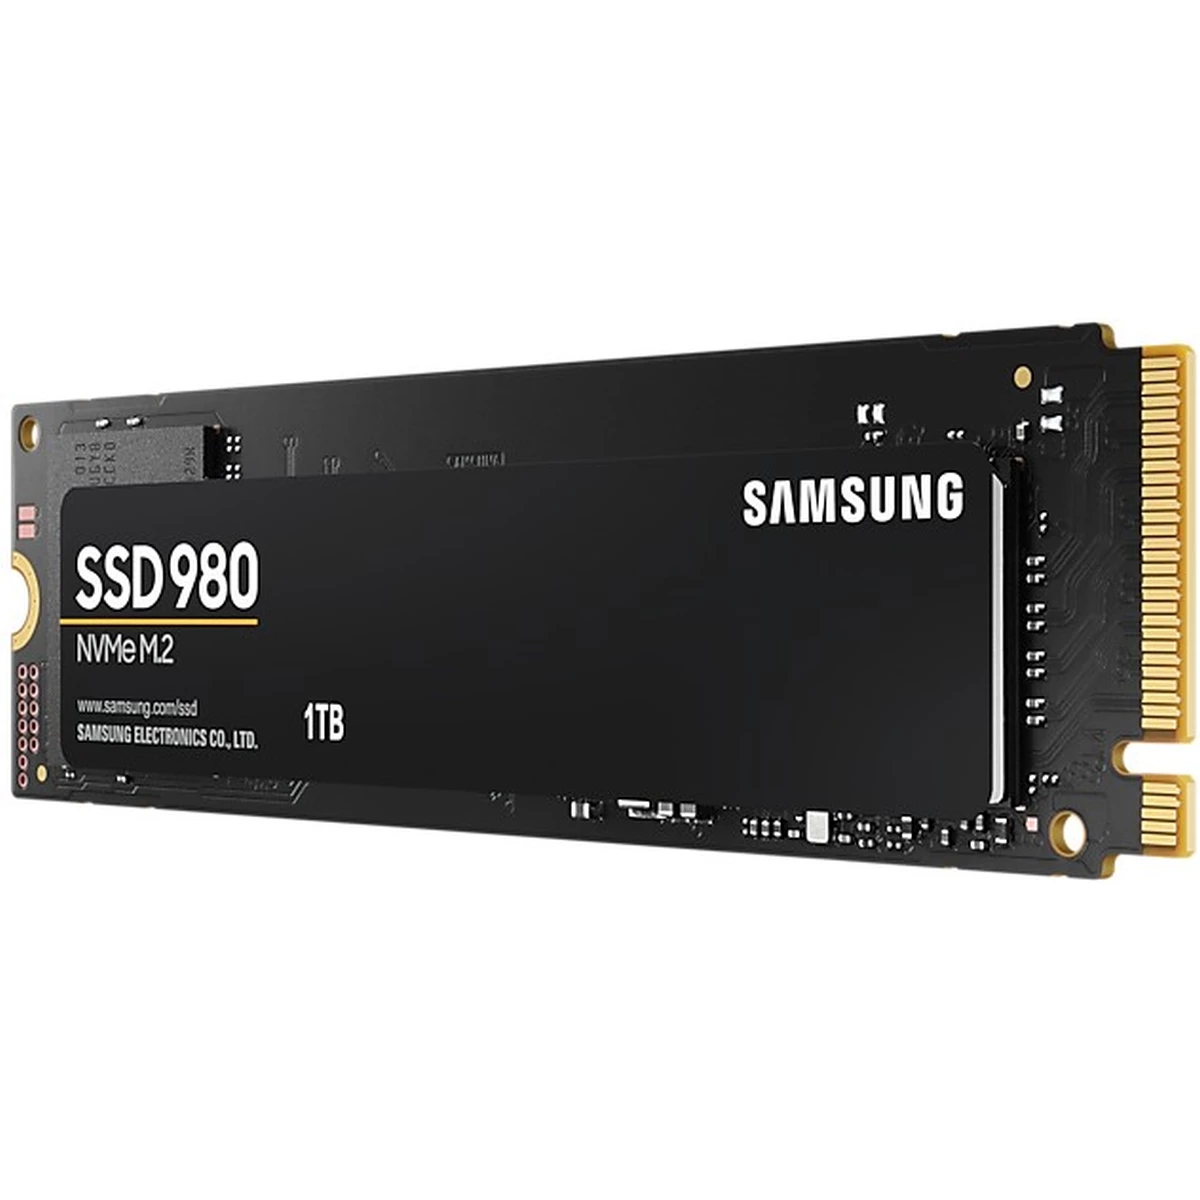 SSD M.2 1TB Samsung 980 NVMe PCIe 3.0 x 4 retail